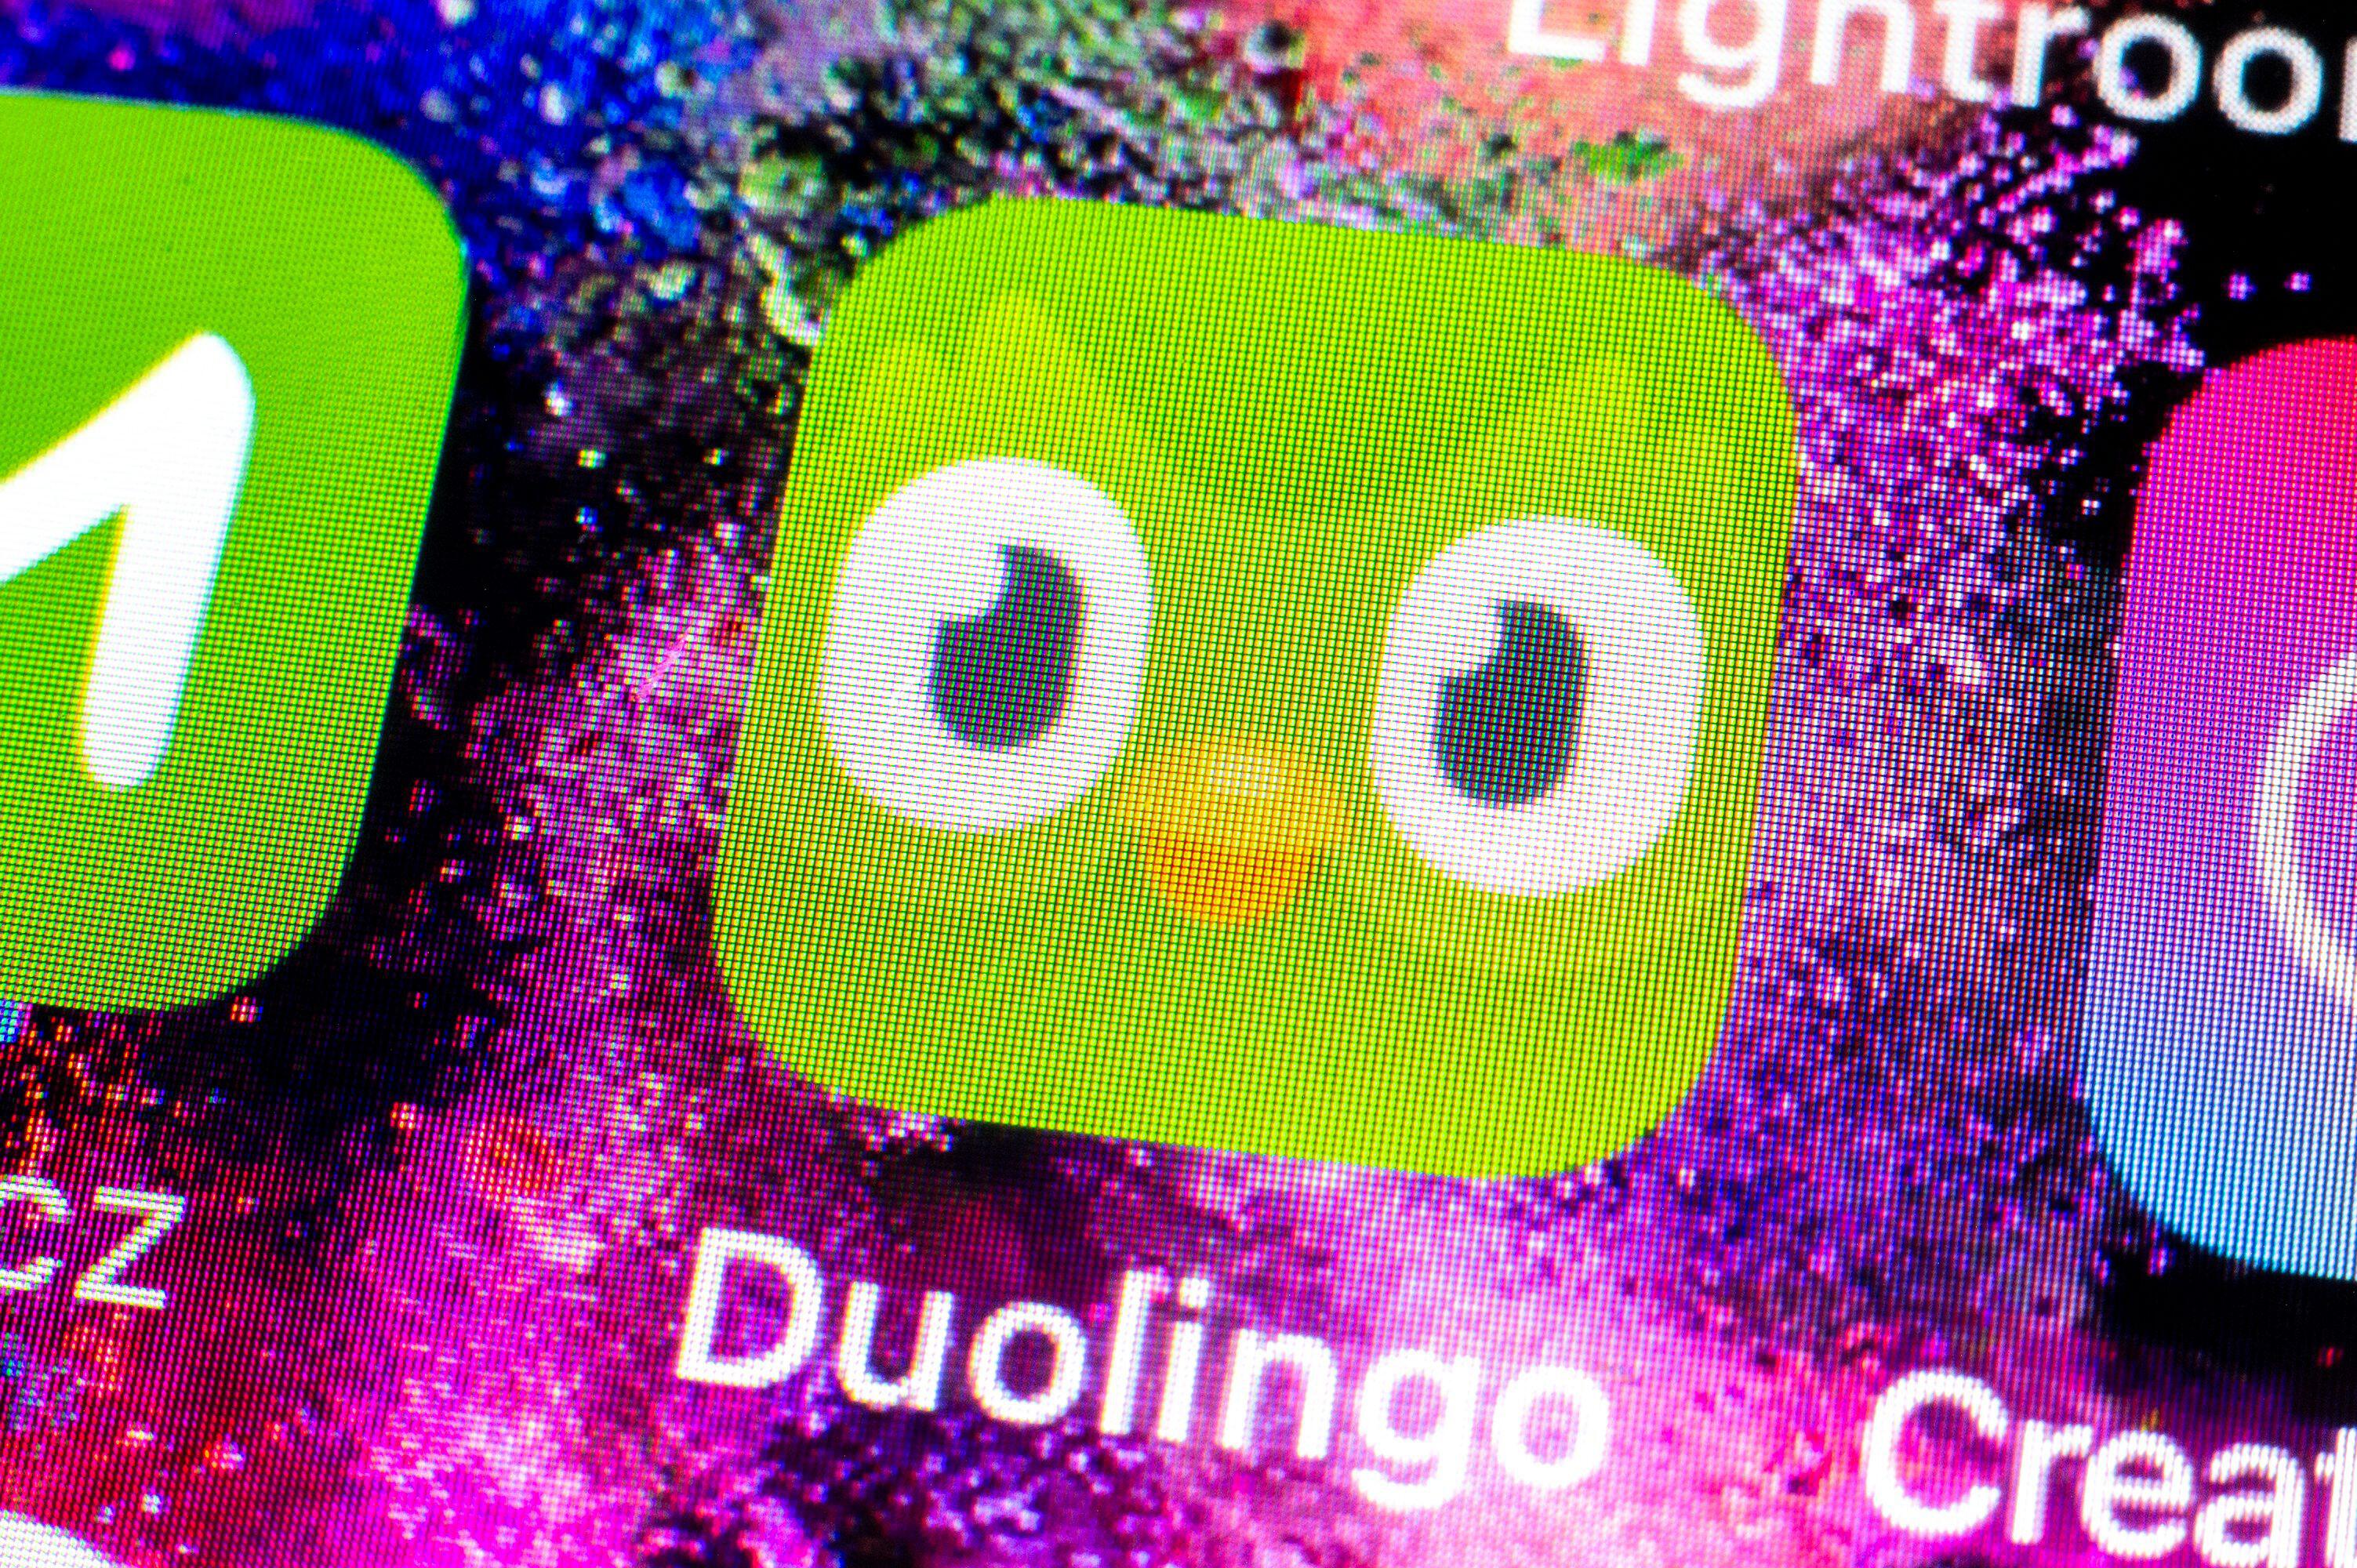 Duo the owl: Duolingo’s friendly, feathered ambassador